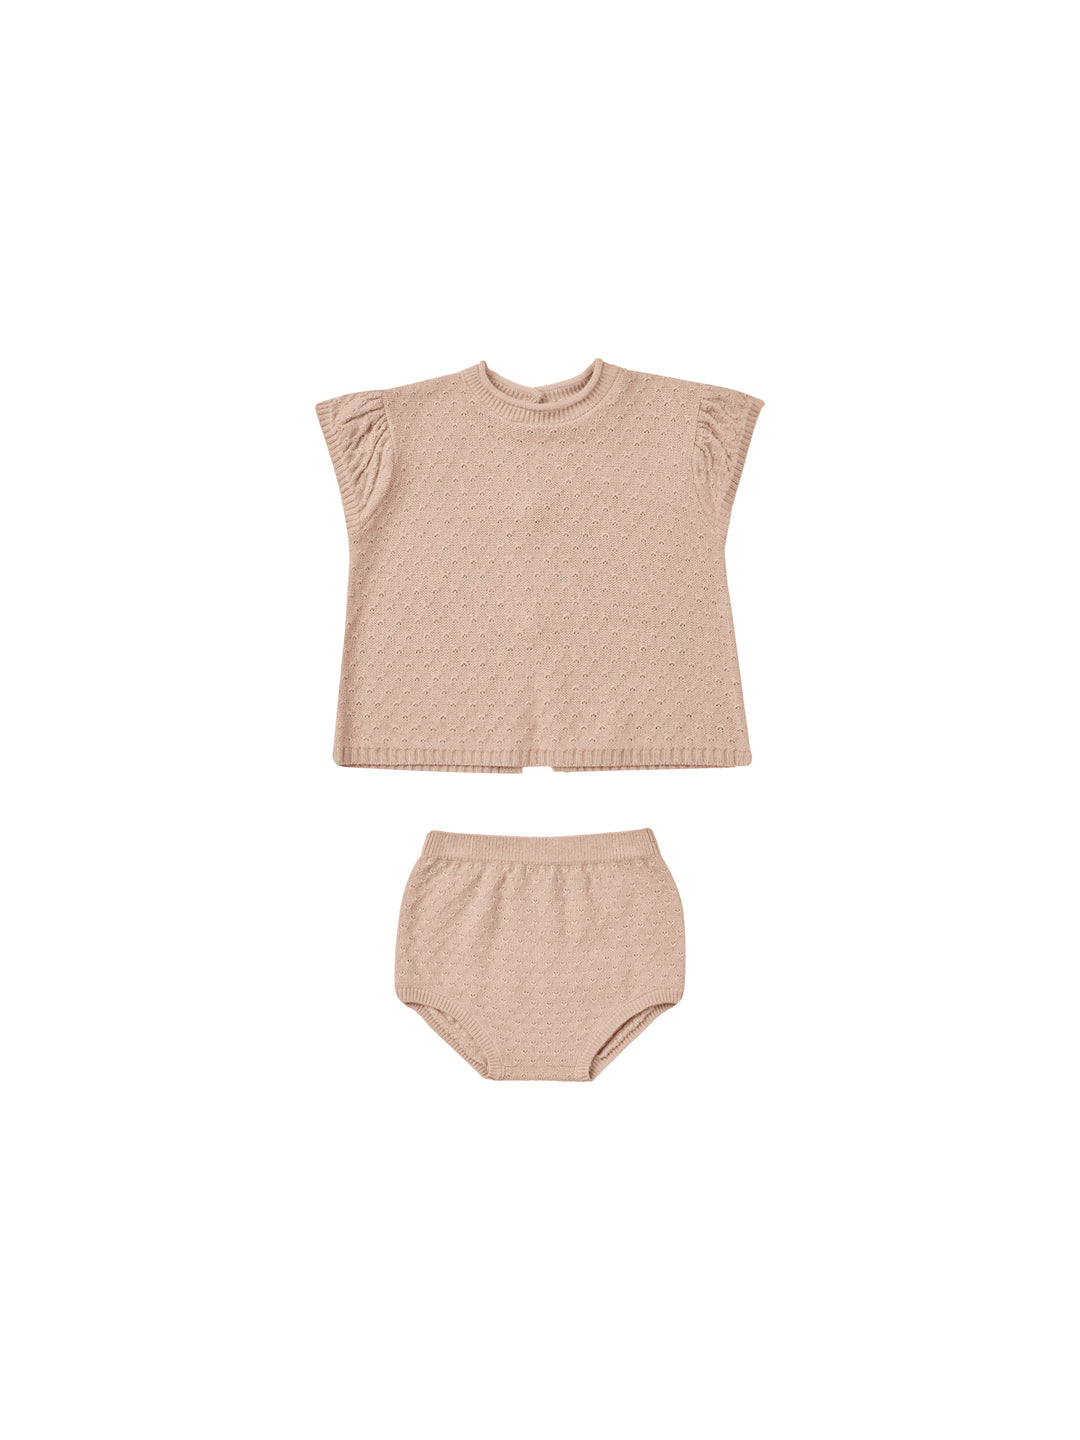 Quincy Mae Penny Knit Set, Blush |Mockingbird Baby & Kids